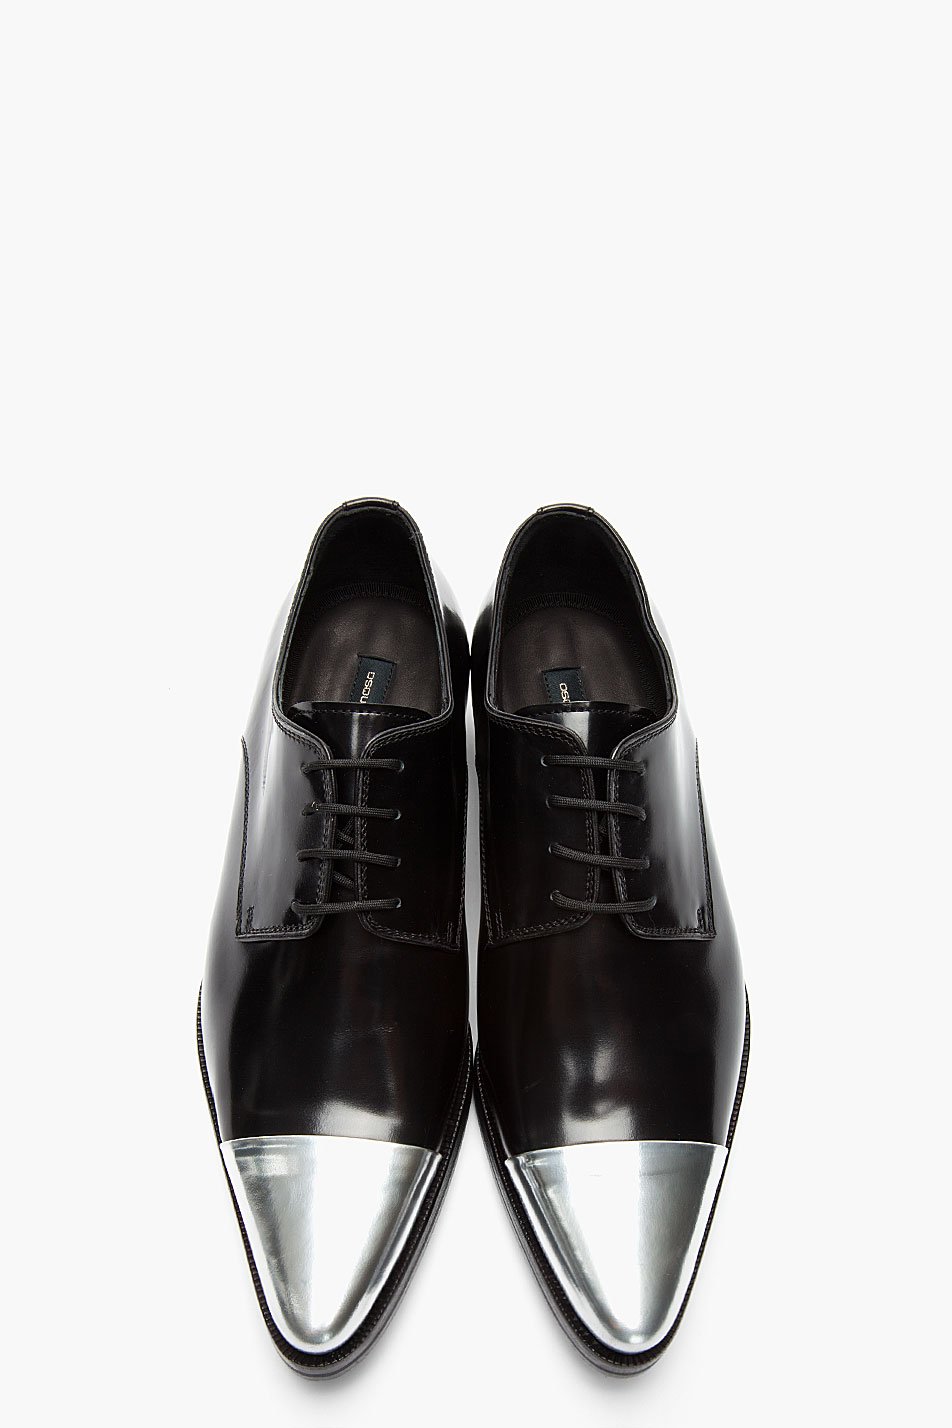 DSquared² Black Silver Cap Toe Derby Leather Dress Shoes